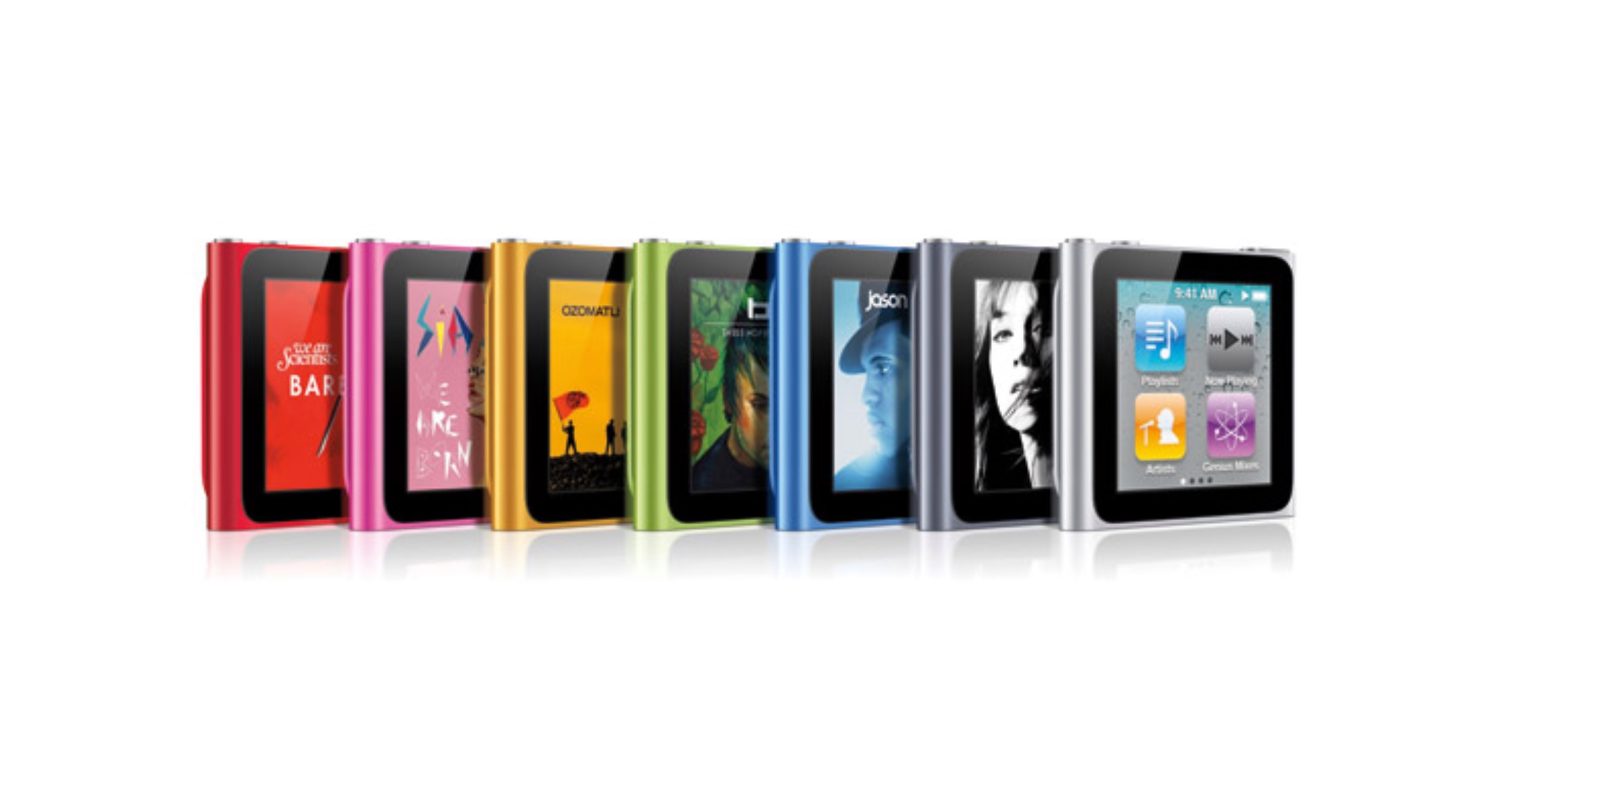 Apple Moves Sixth-Generation iPod Nano to Obsolete Status